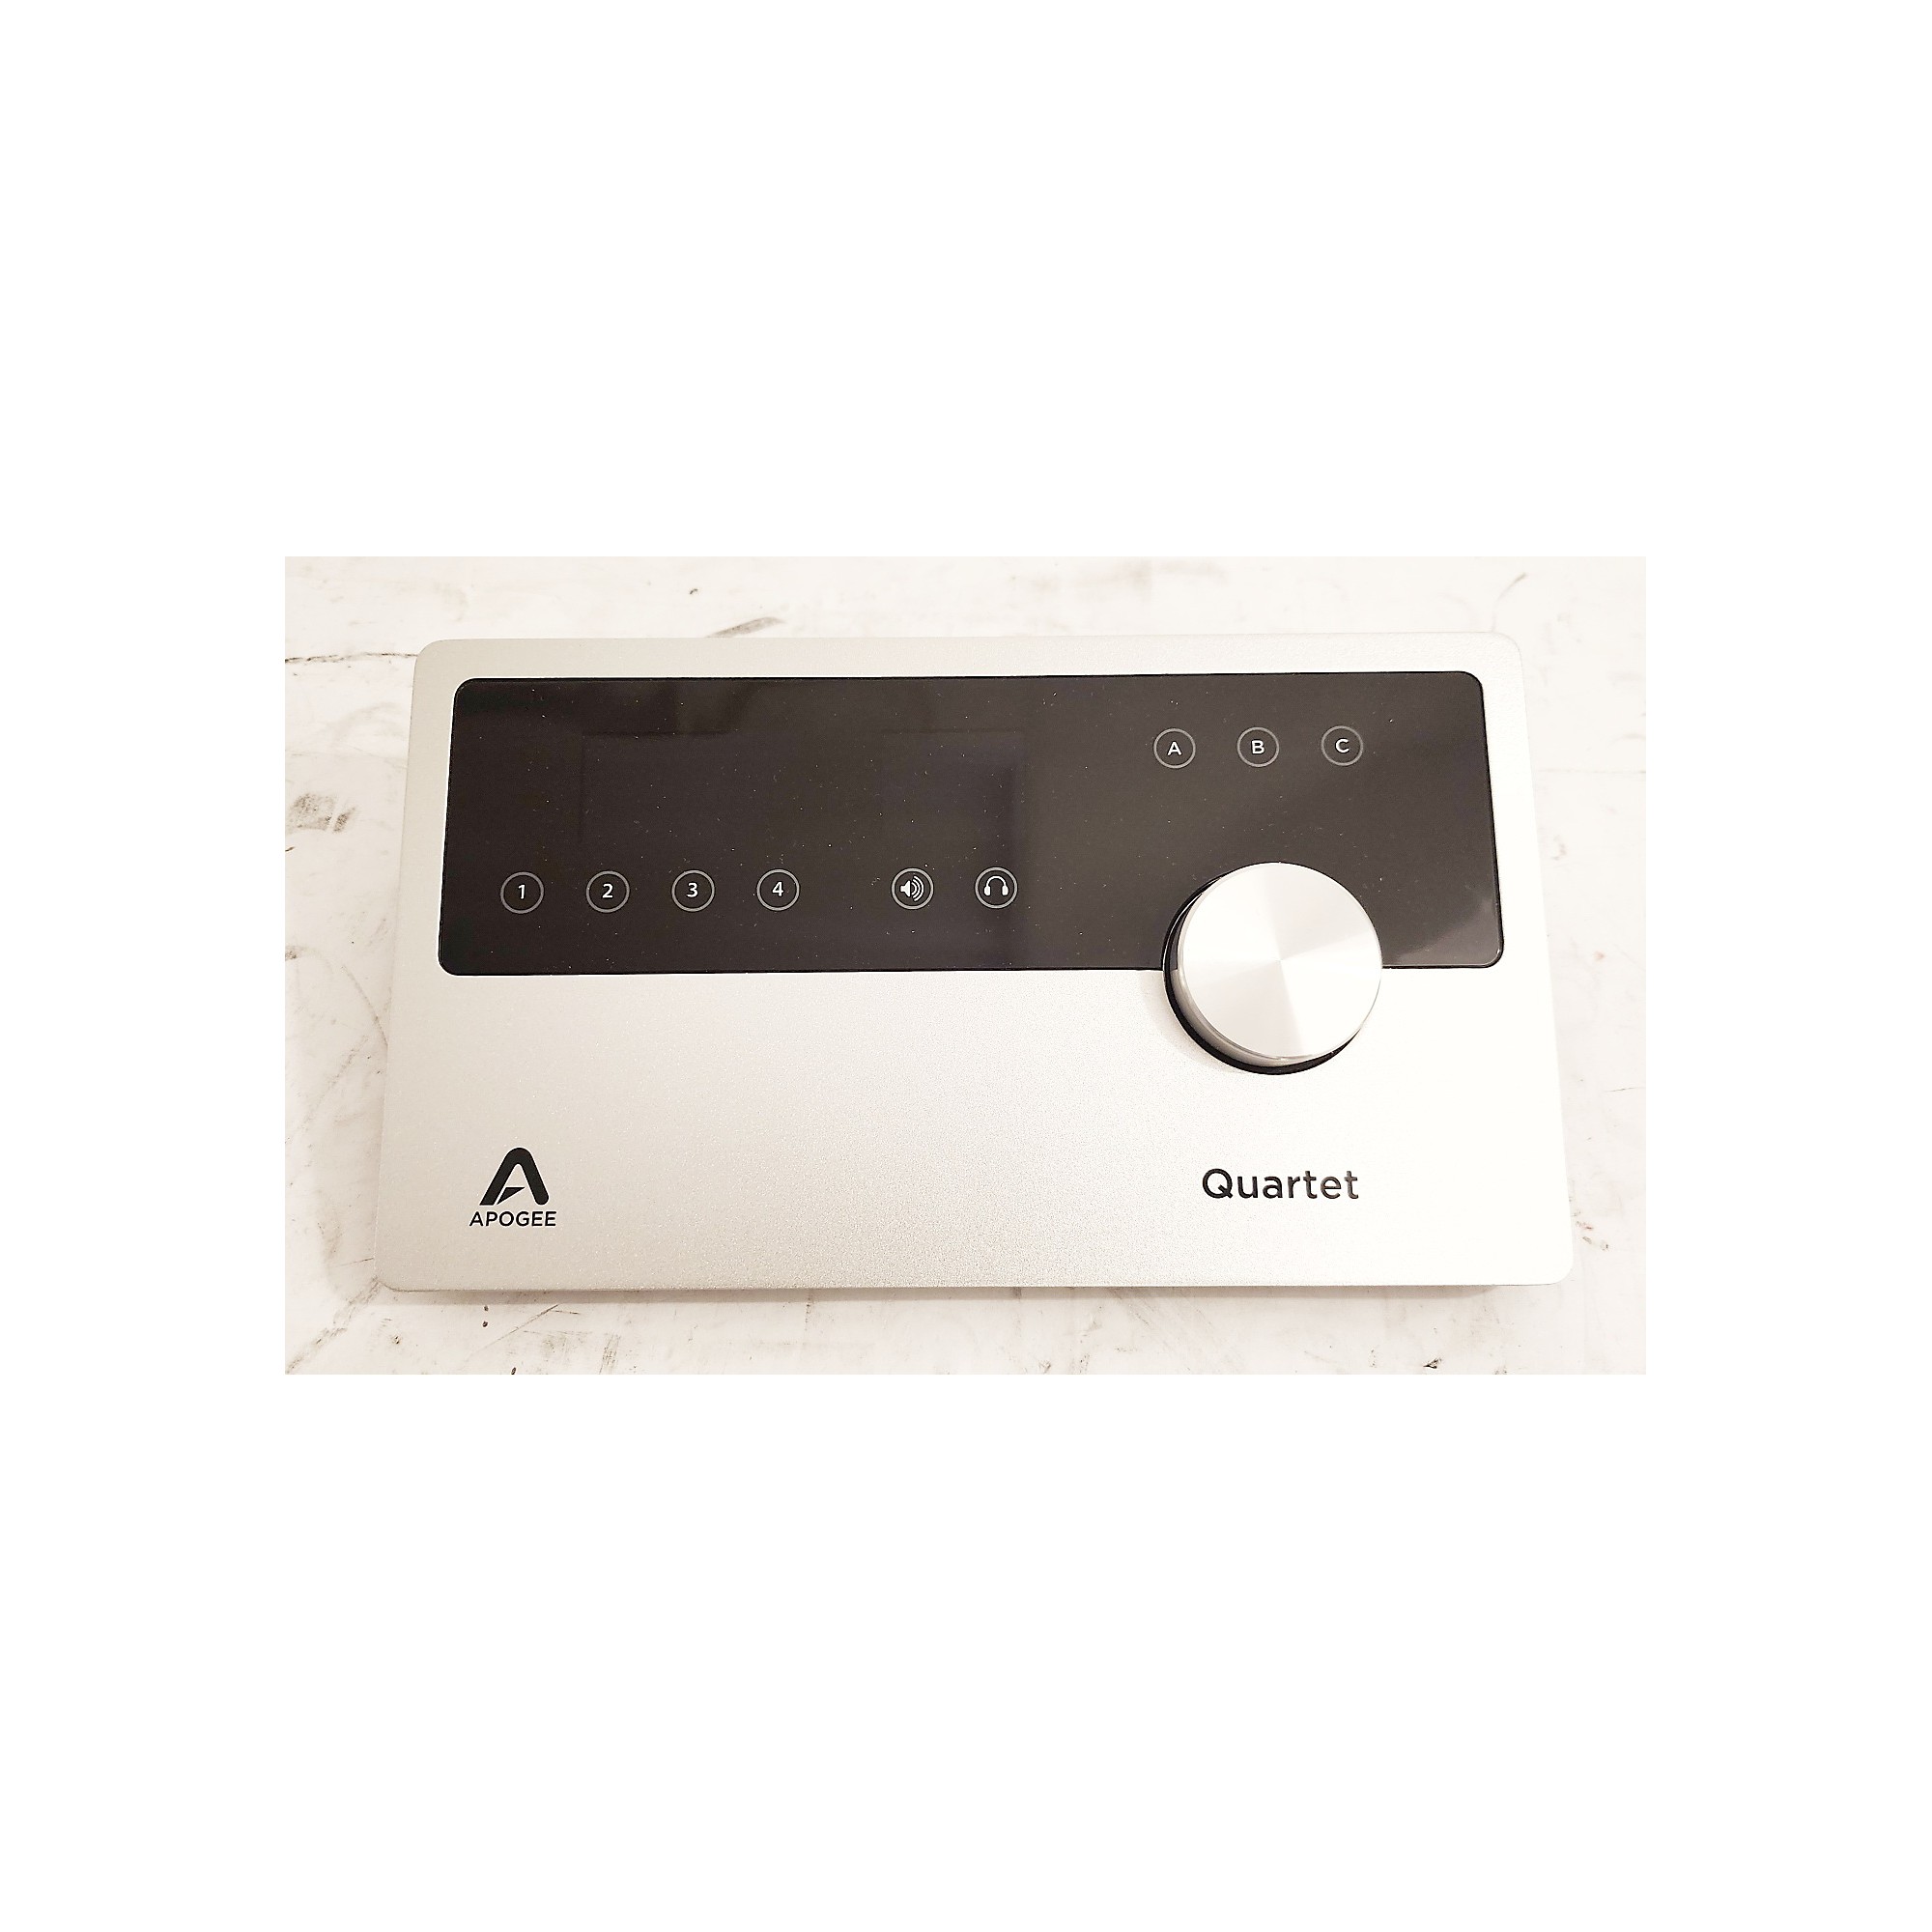 Used Apogee Quartet Audio Interface Audio Interface